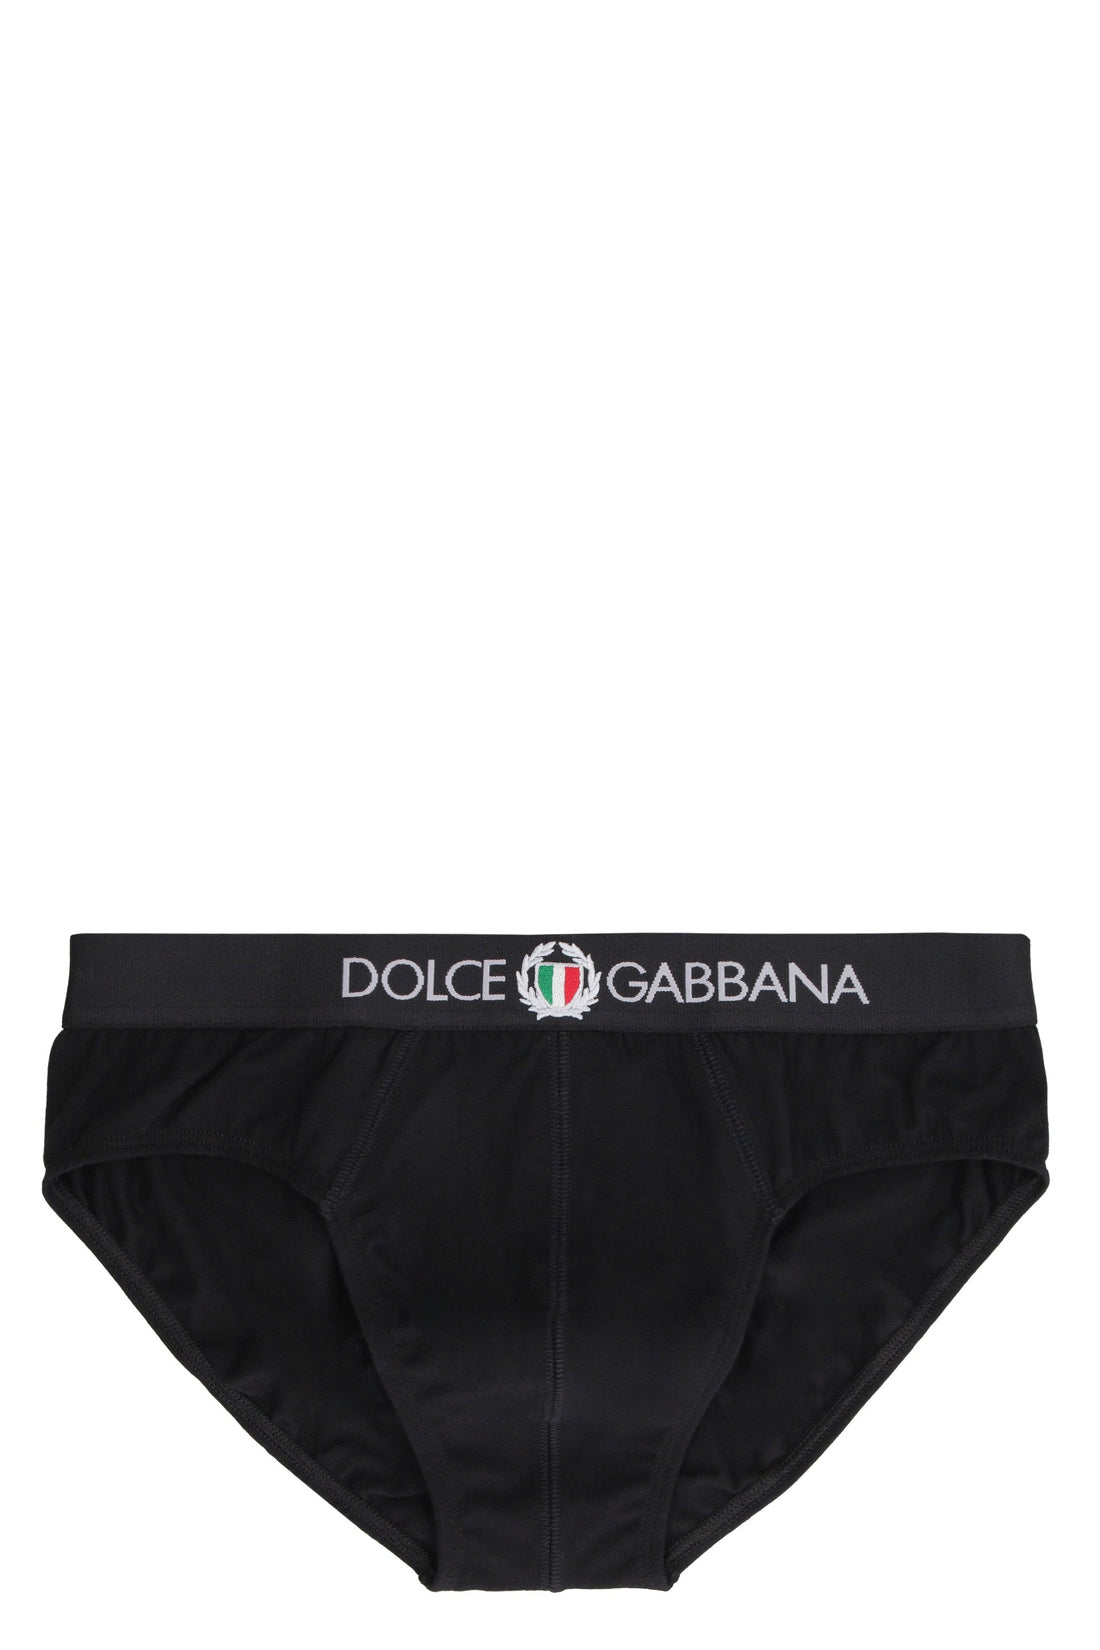 Dolce & Gabbana-OUTLET-SALE-Cotton briefs with elastic band-ARCHIVIST